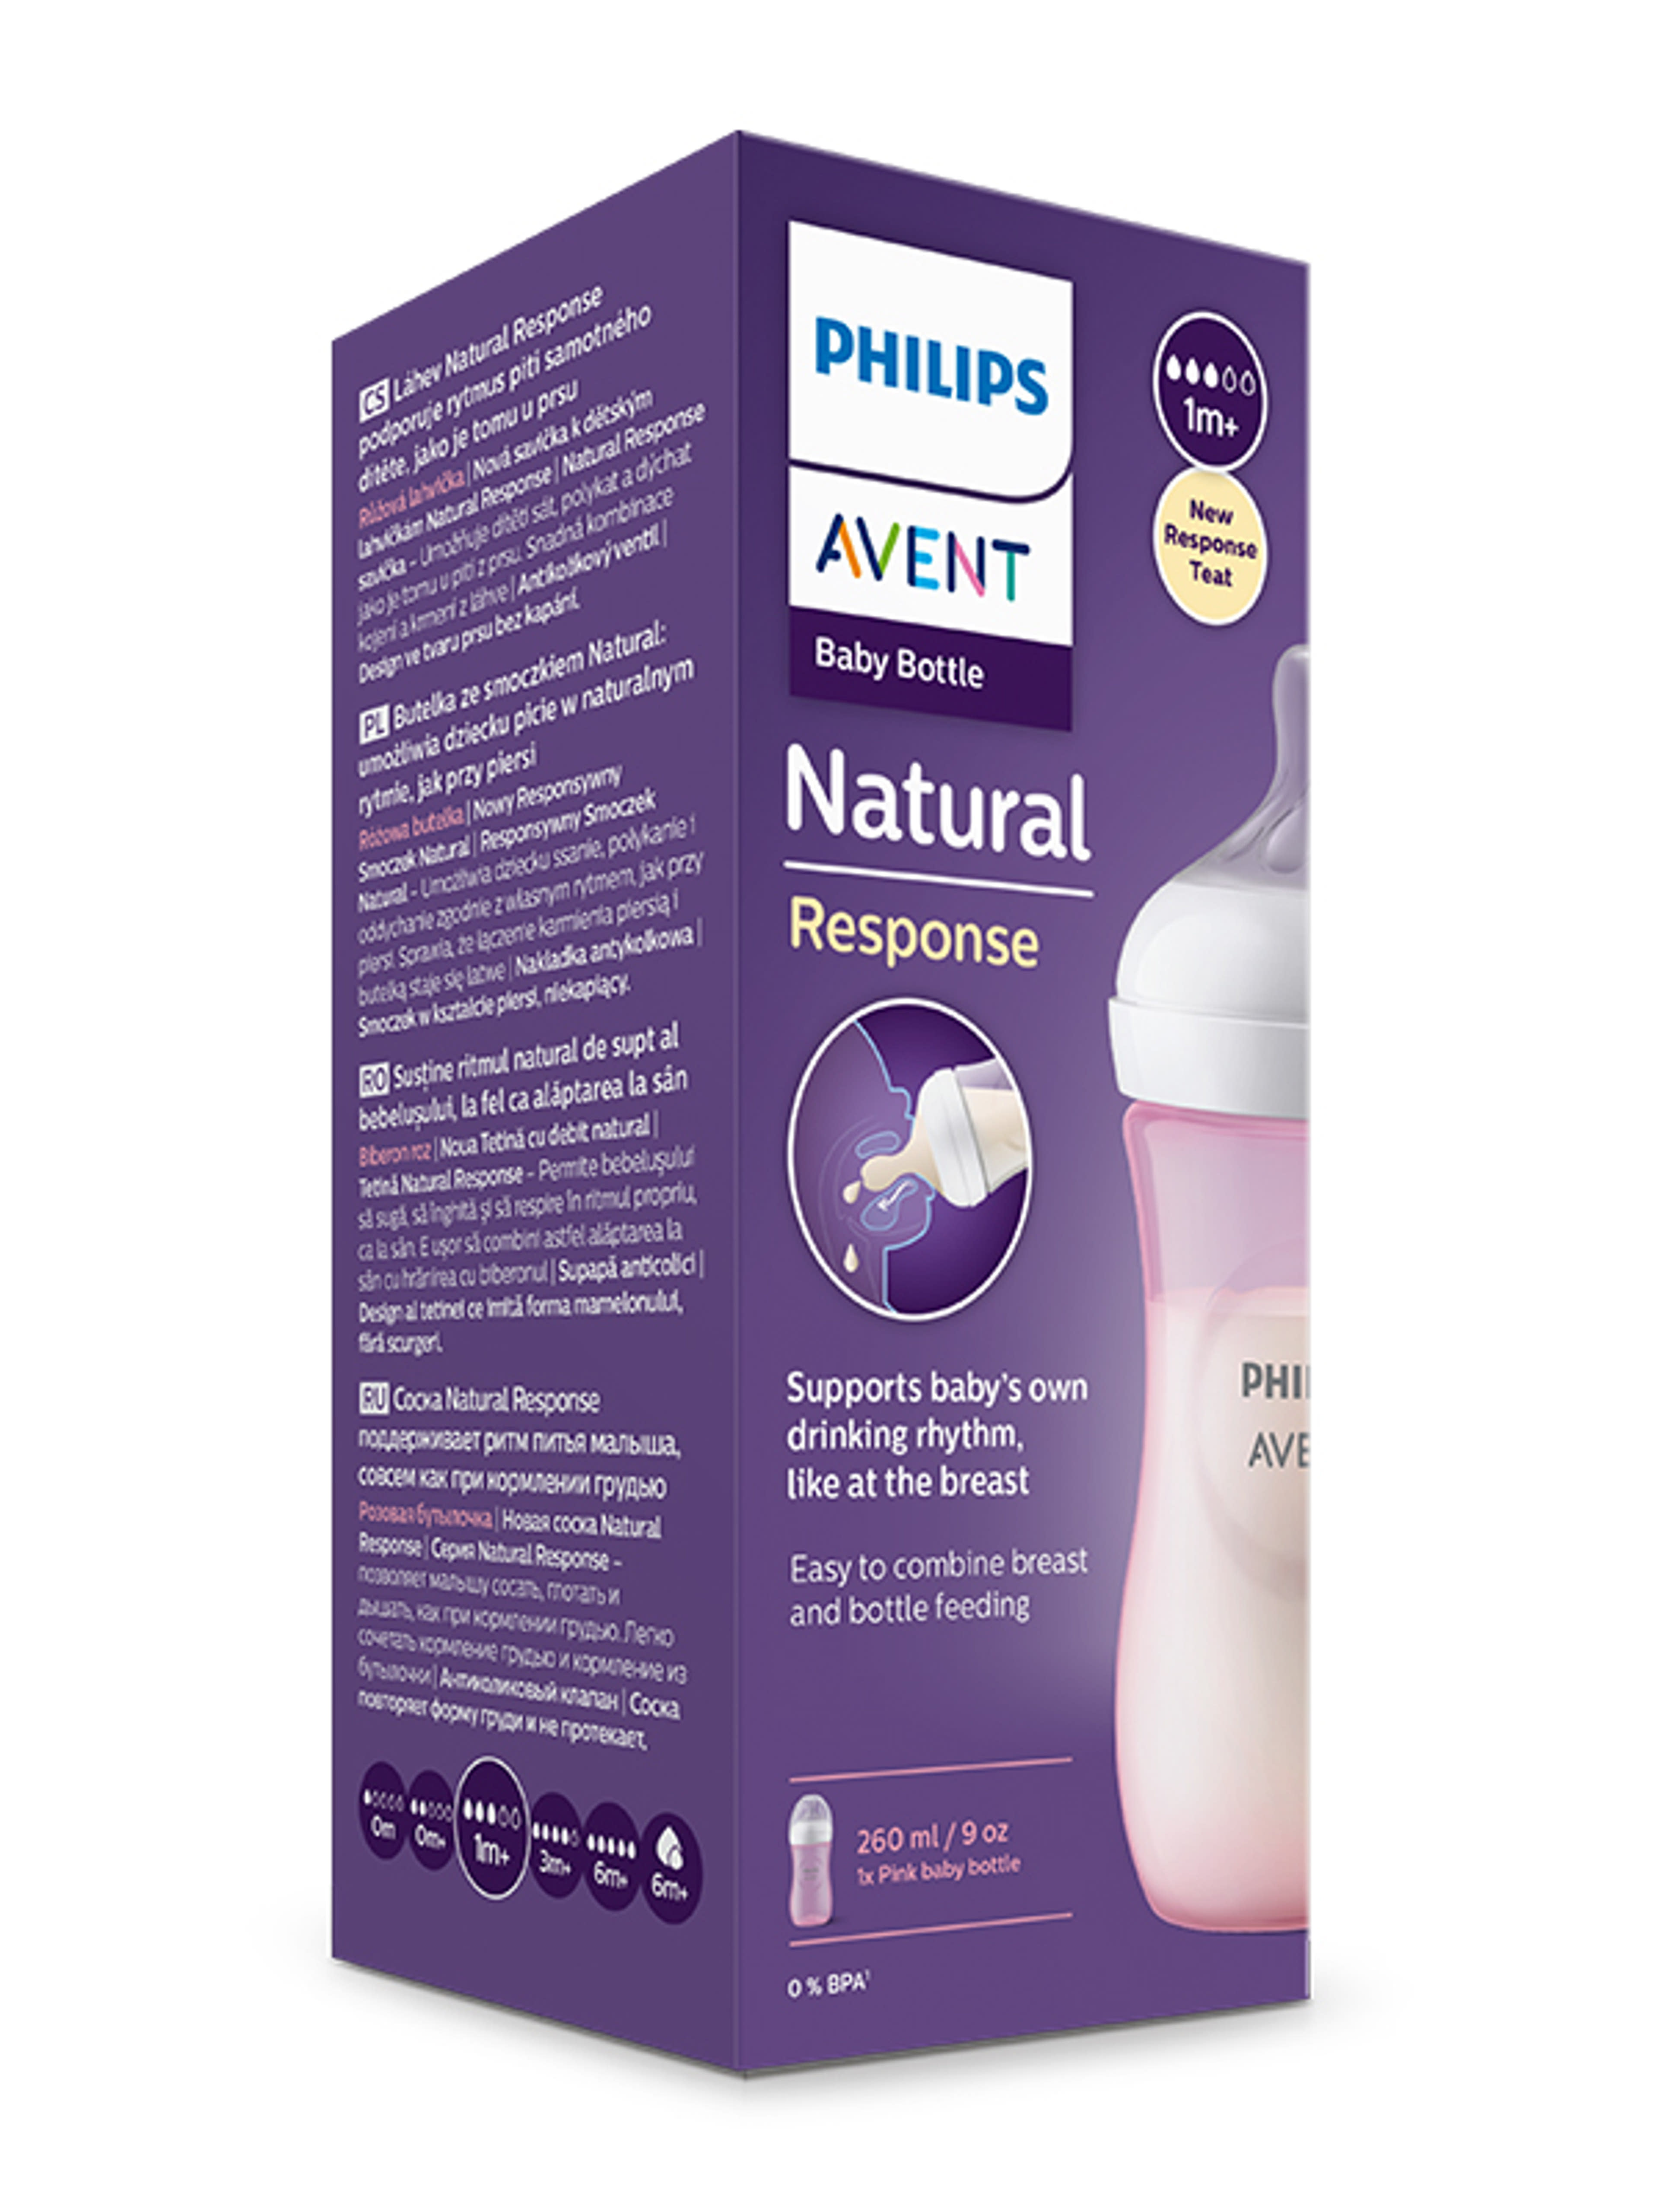 Philips Avent Natural Response cumisüveg 1 hónapos kortól 260 ml - 1 db-3